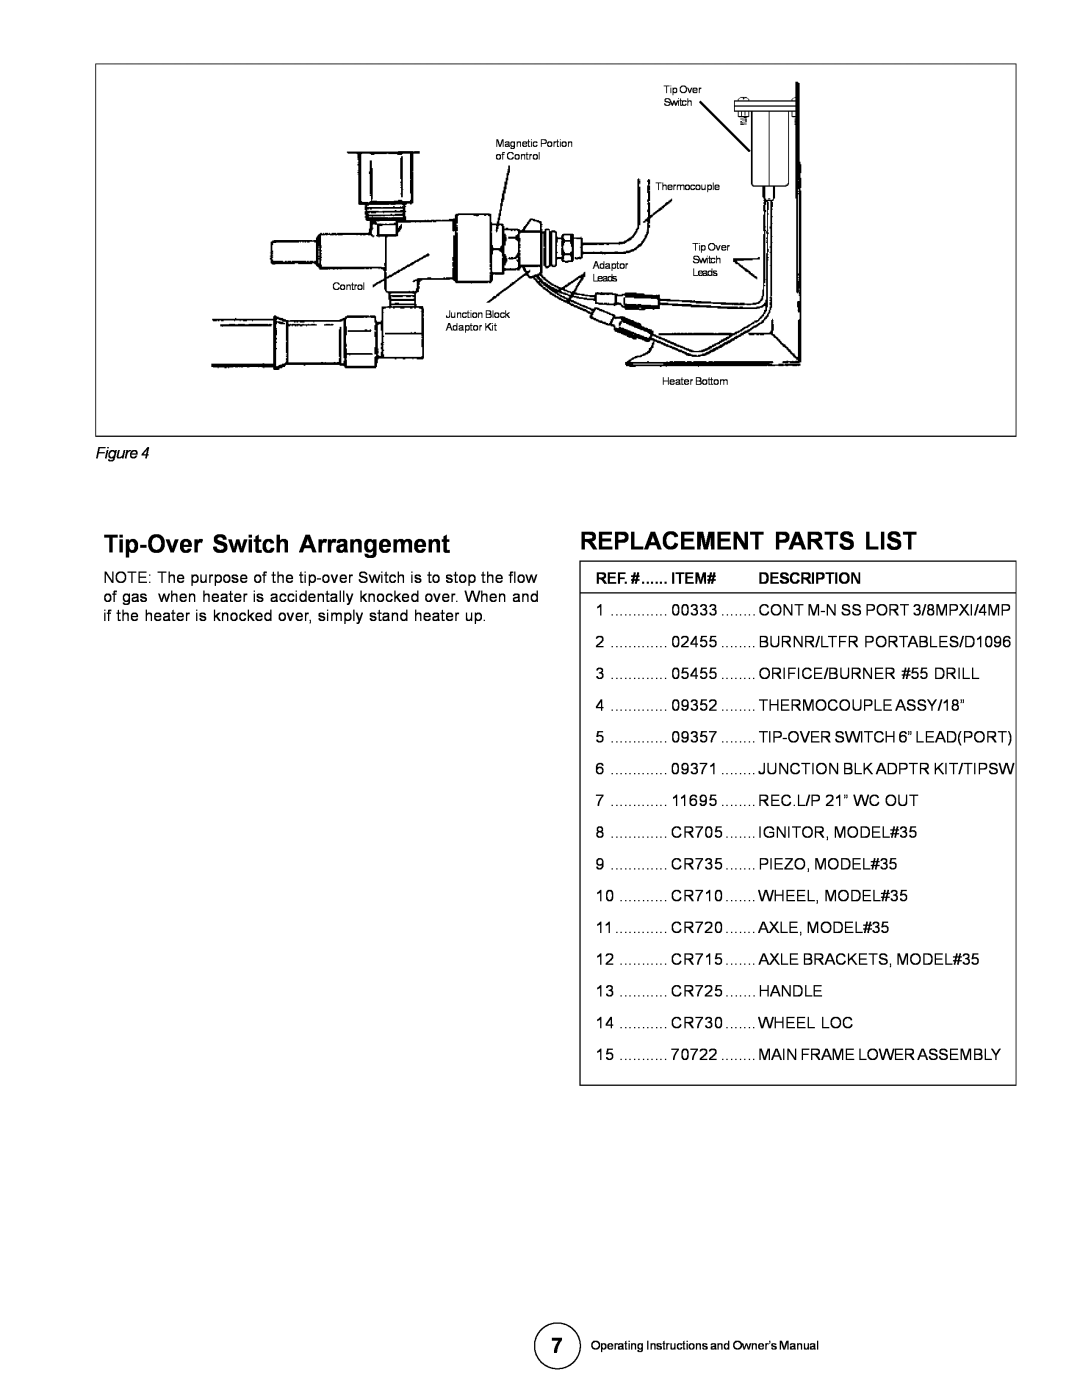 Universal 35-R owner manual Tip-OverSwitch Arrangement, Replacement Parts List, Ref. #, Item#, Description 